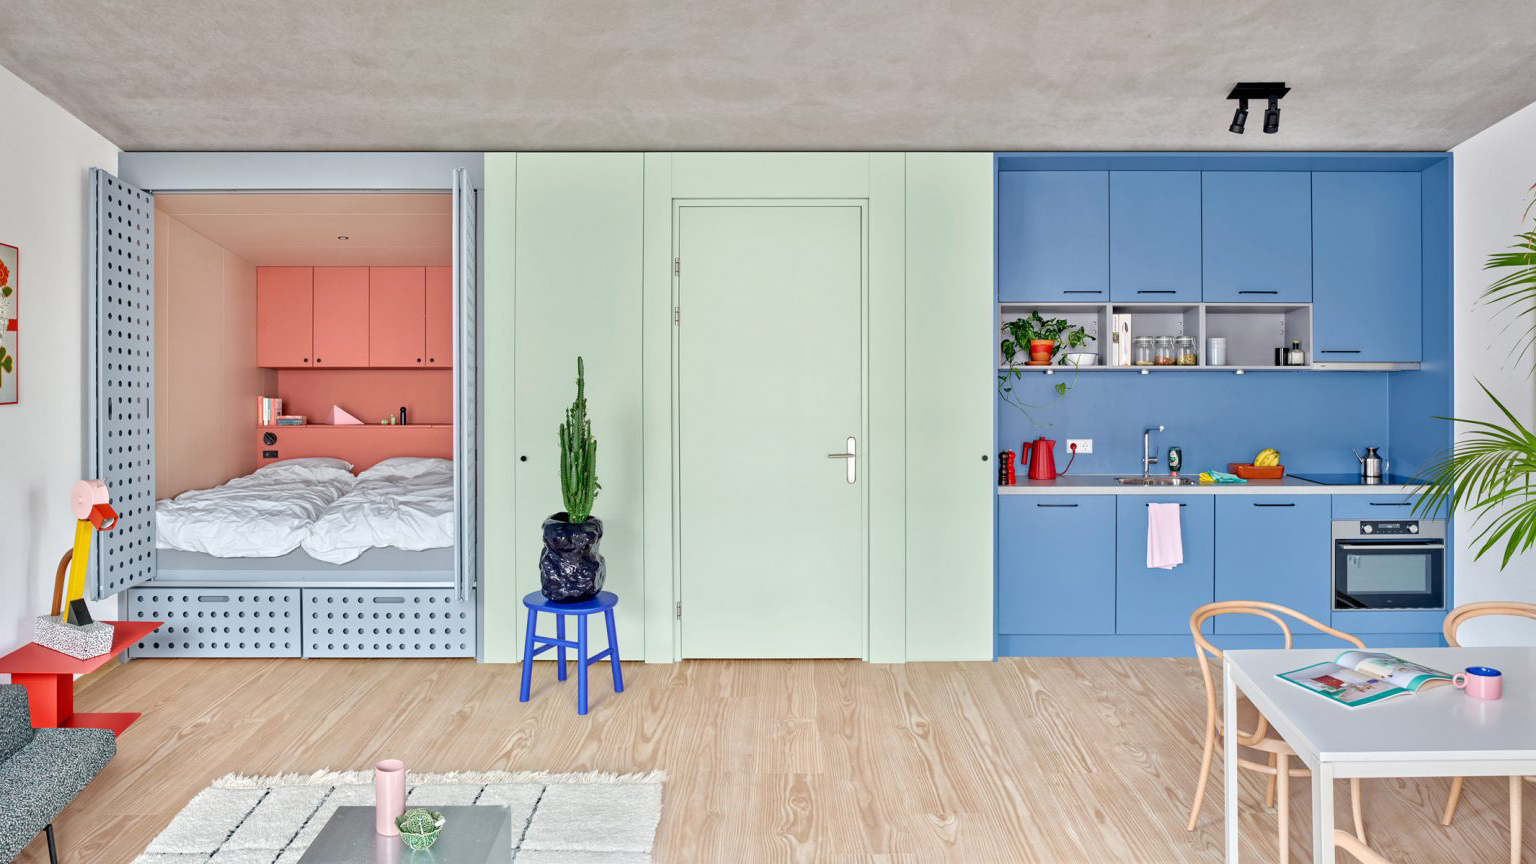 Amsterdam apartment block features cupboard bedrooms